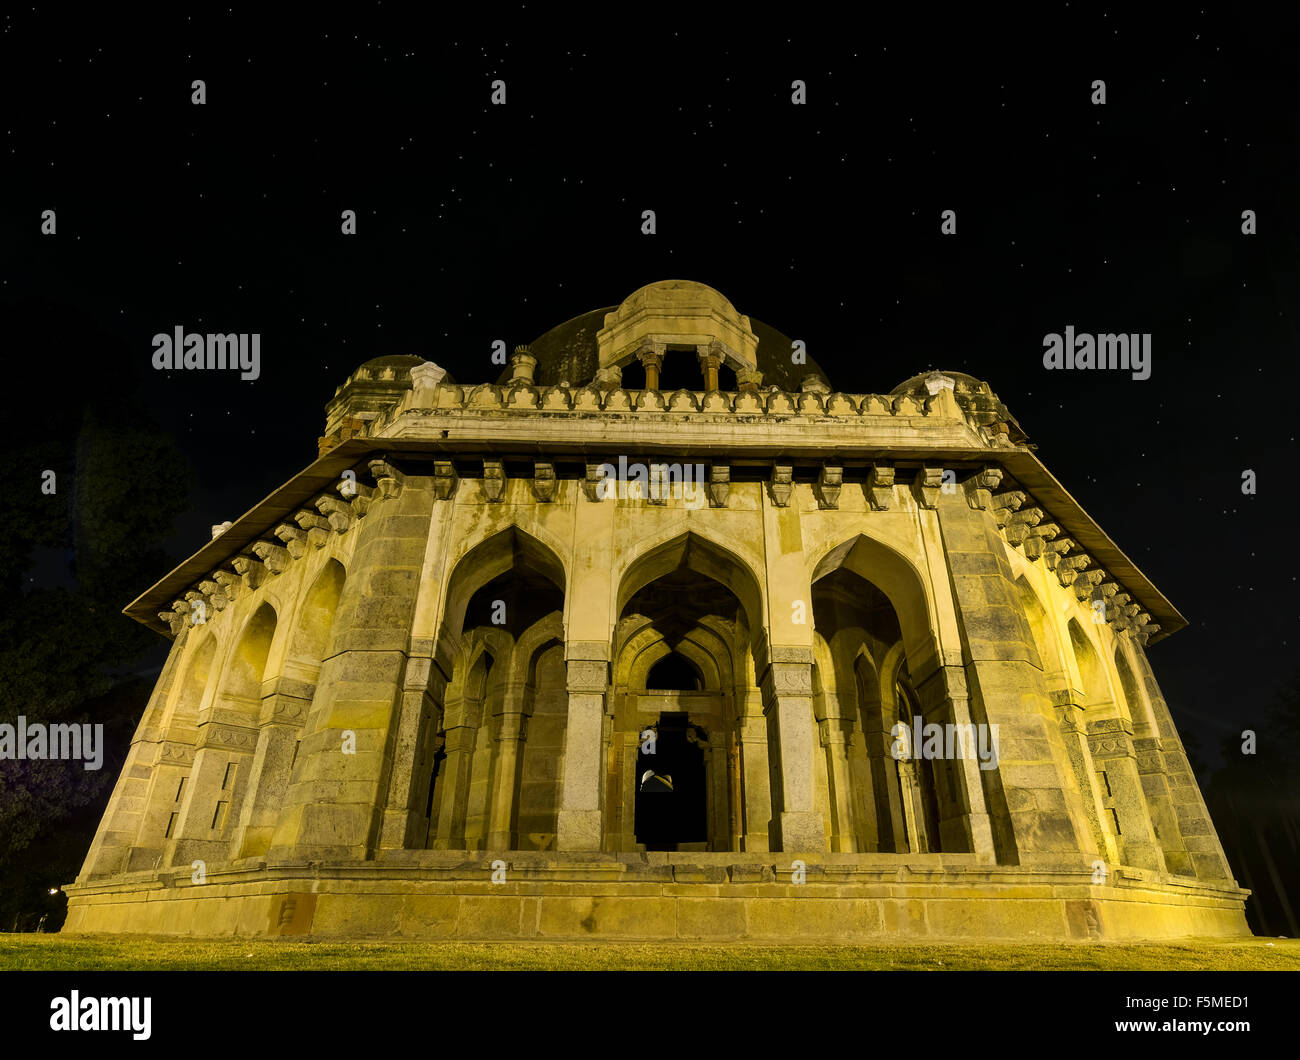 Mohammed Shah Sayyid's Tomb at Lodhi Garden, New Delhi Stock Photo